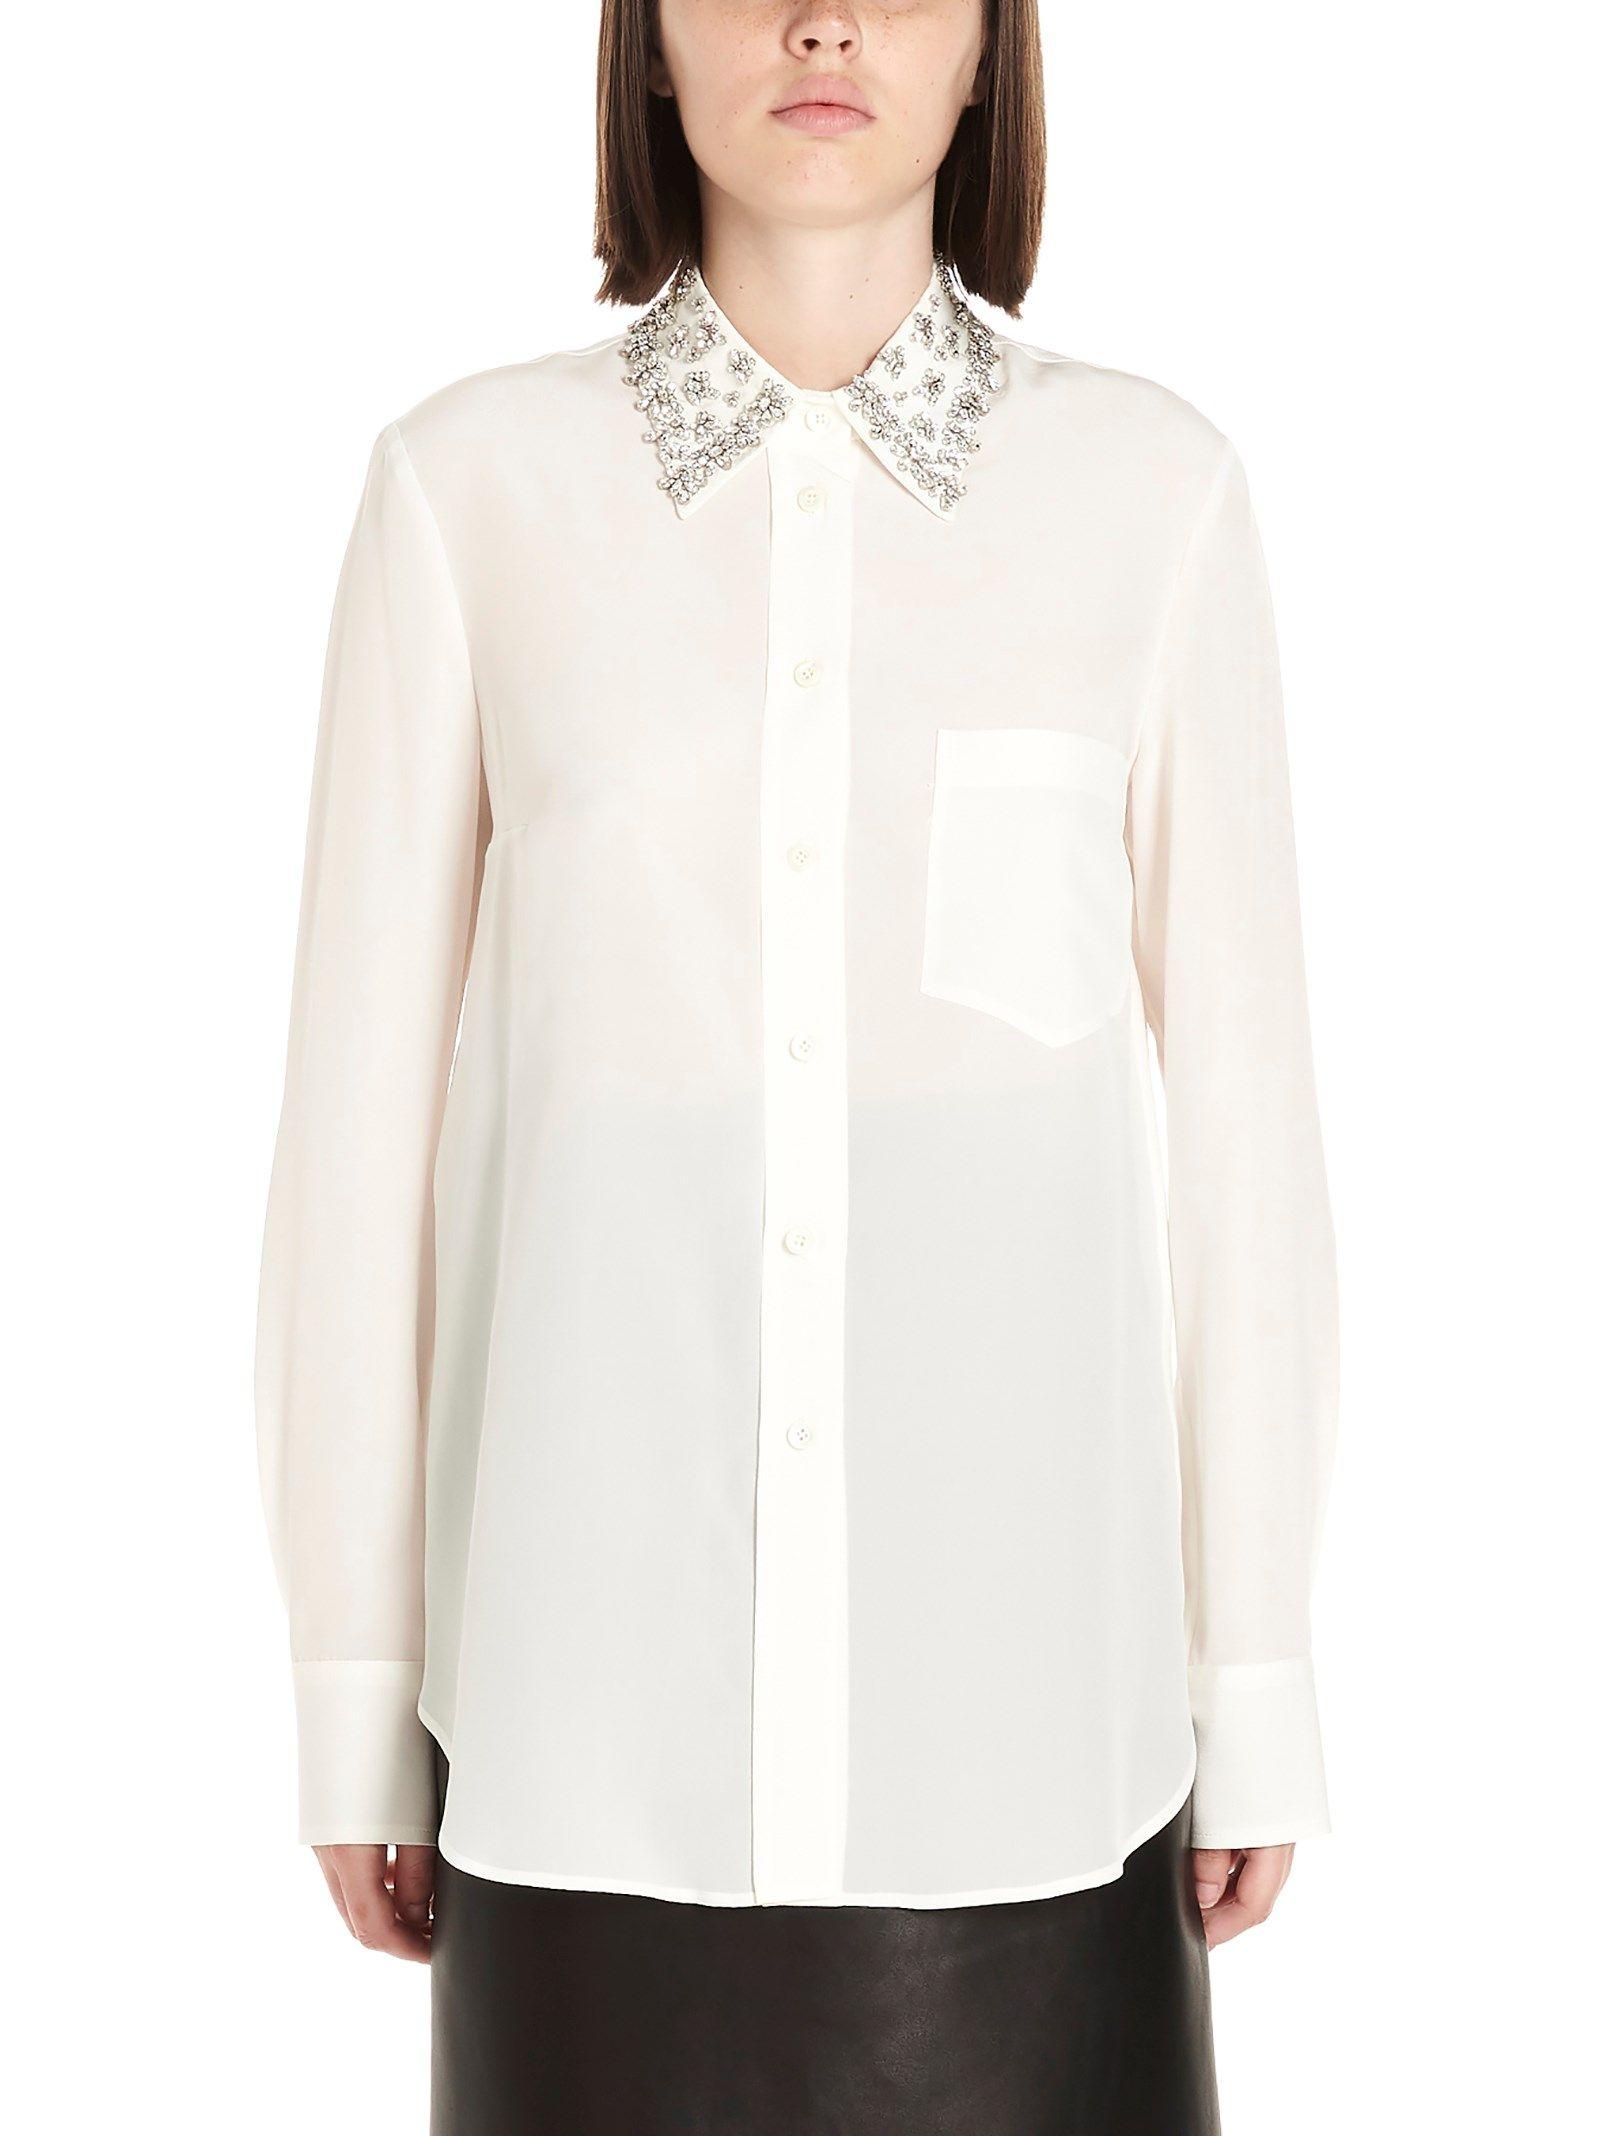 Prada Embellished Collar Blouse in White - Save 20% - Lyst